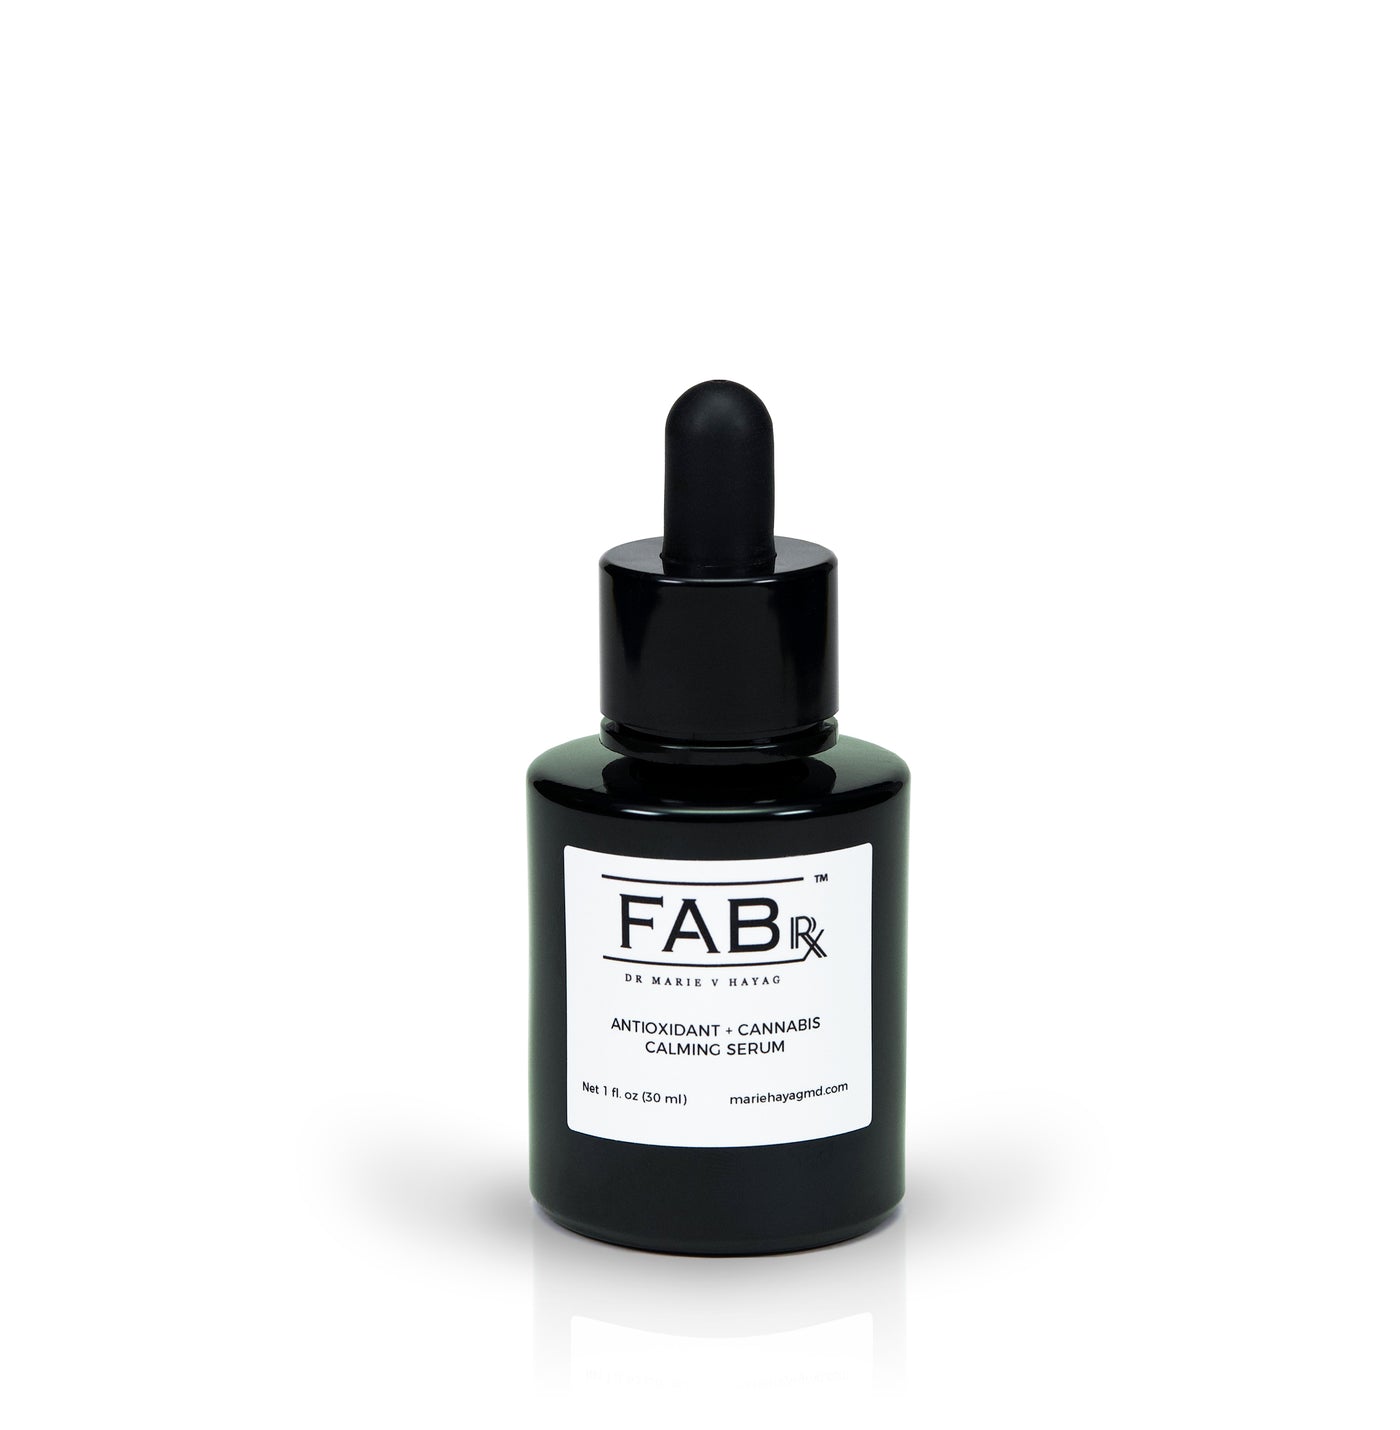 FABrx Antioxidant + Cannabis Calming Serum